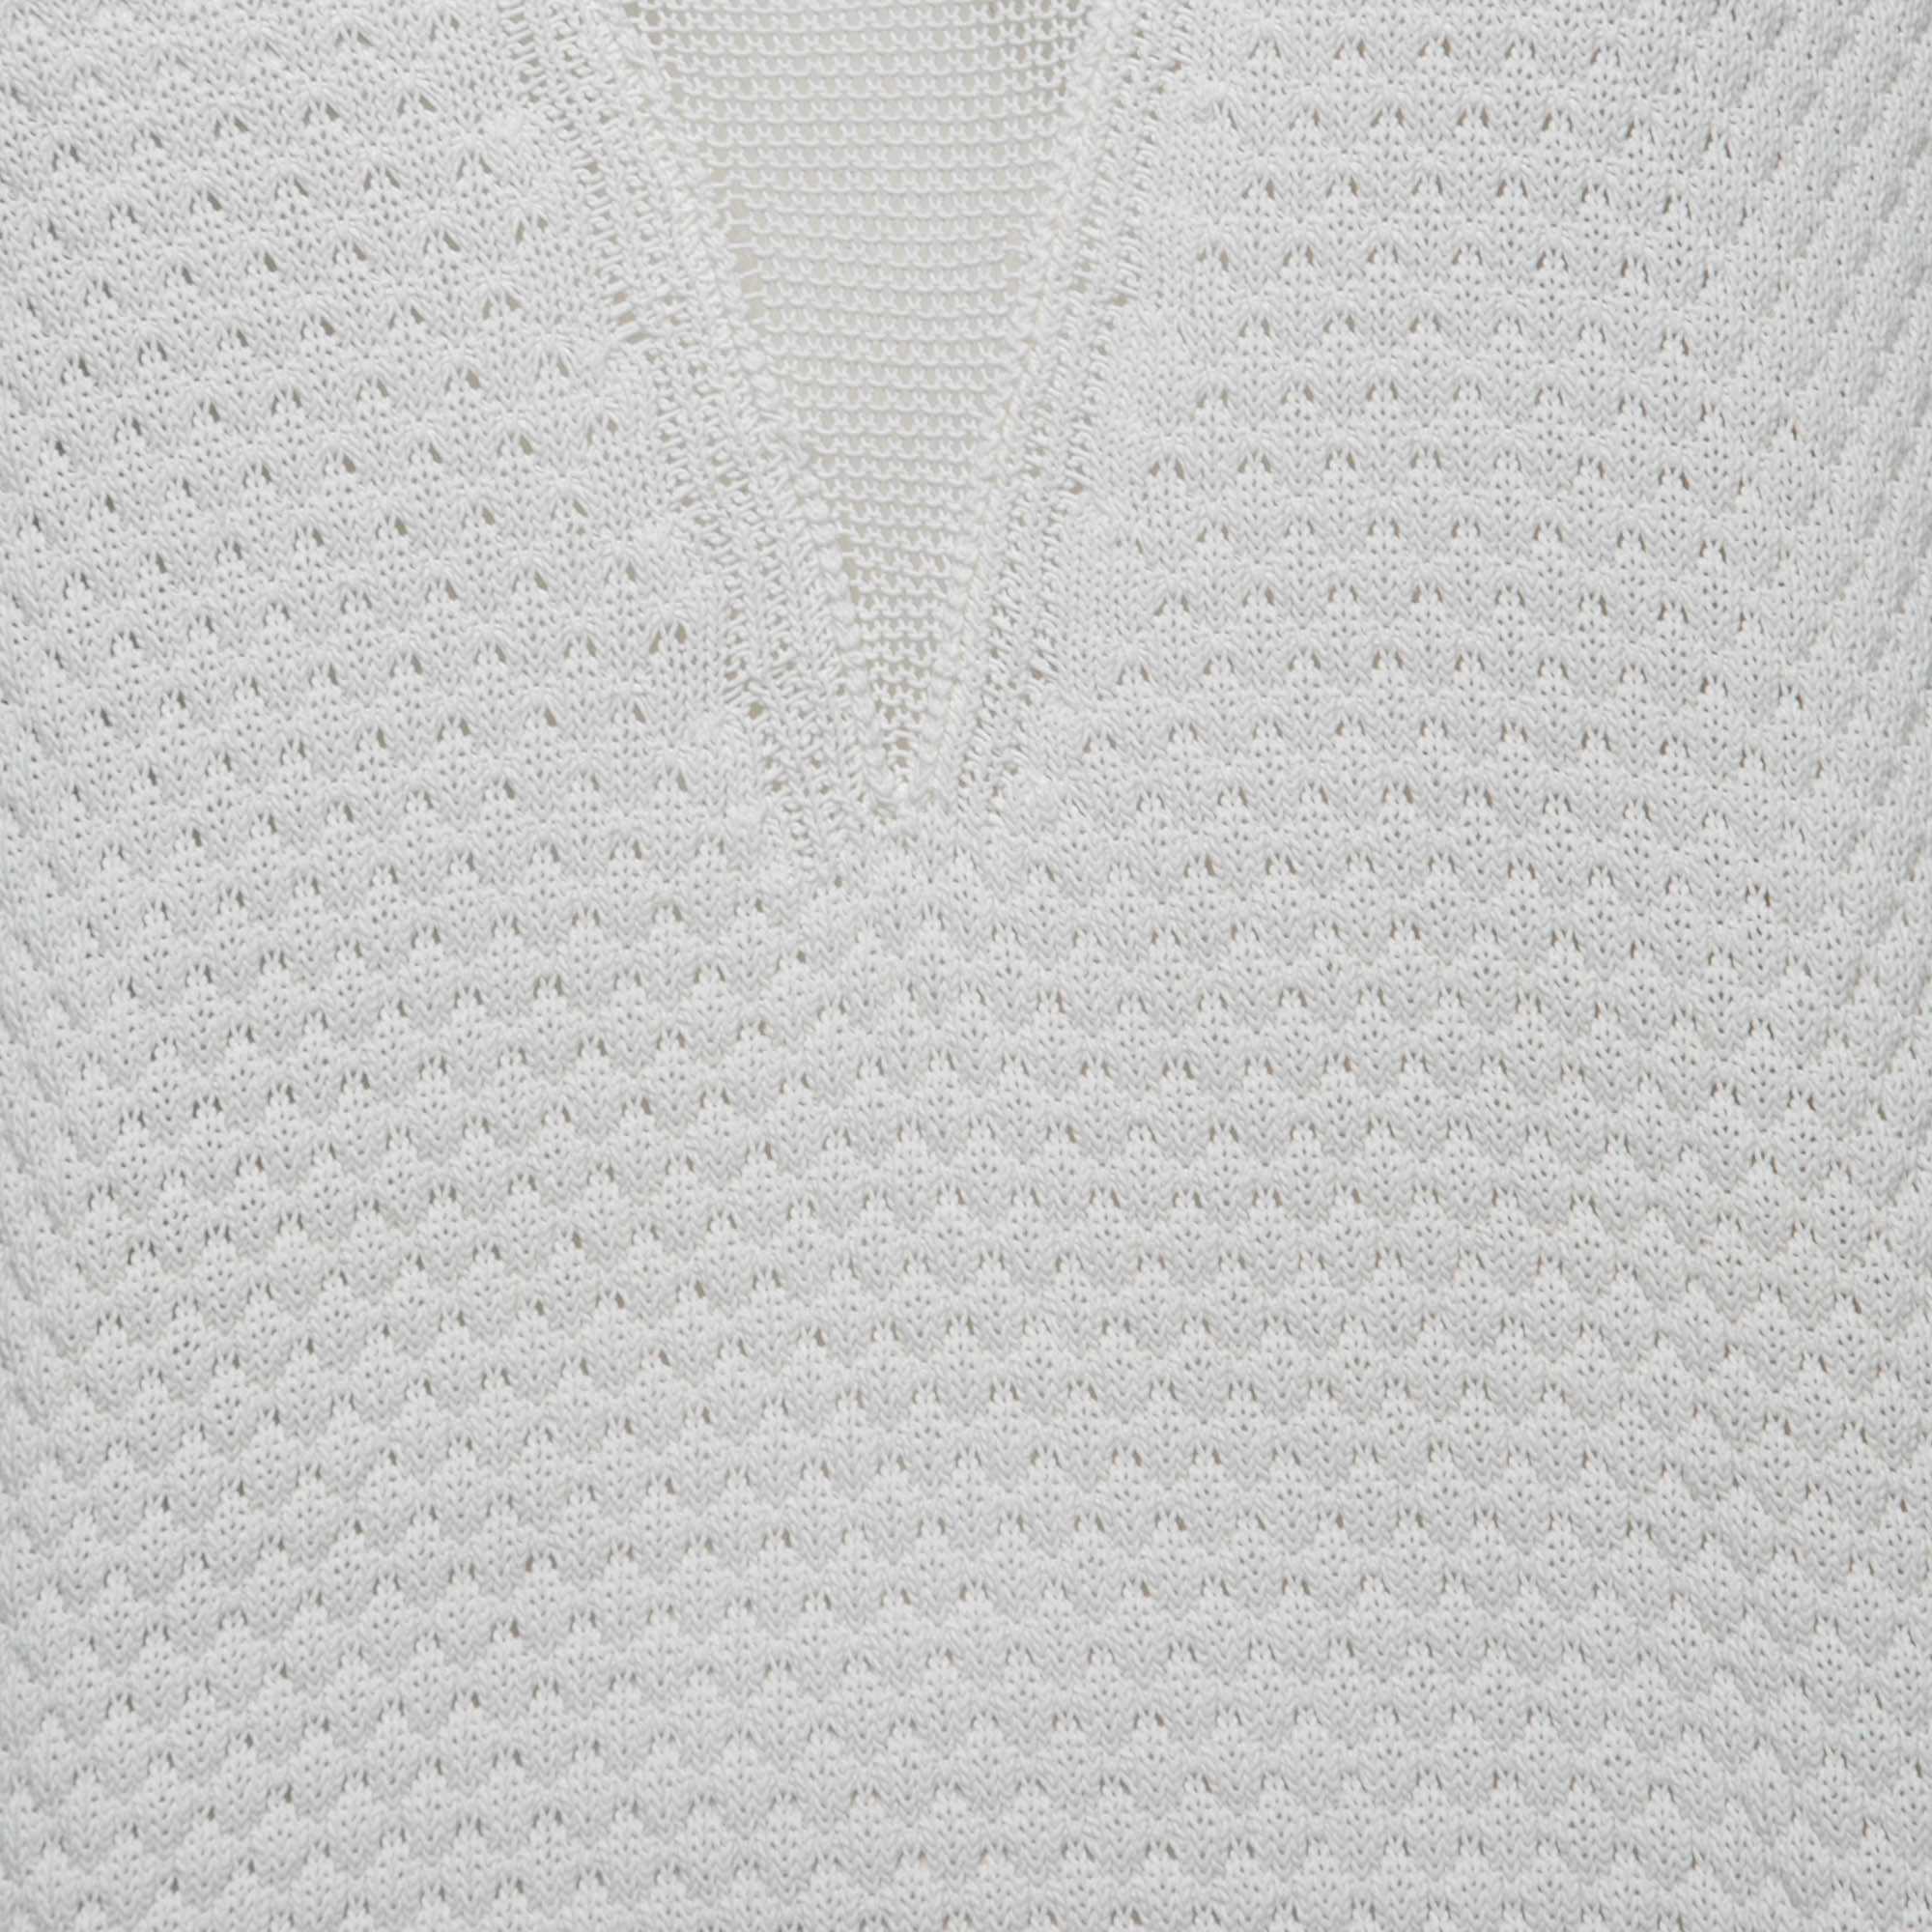 Joseph Off White Cotton Blend Knit Sweater XL